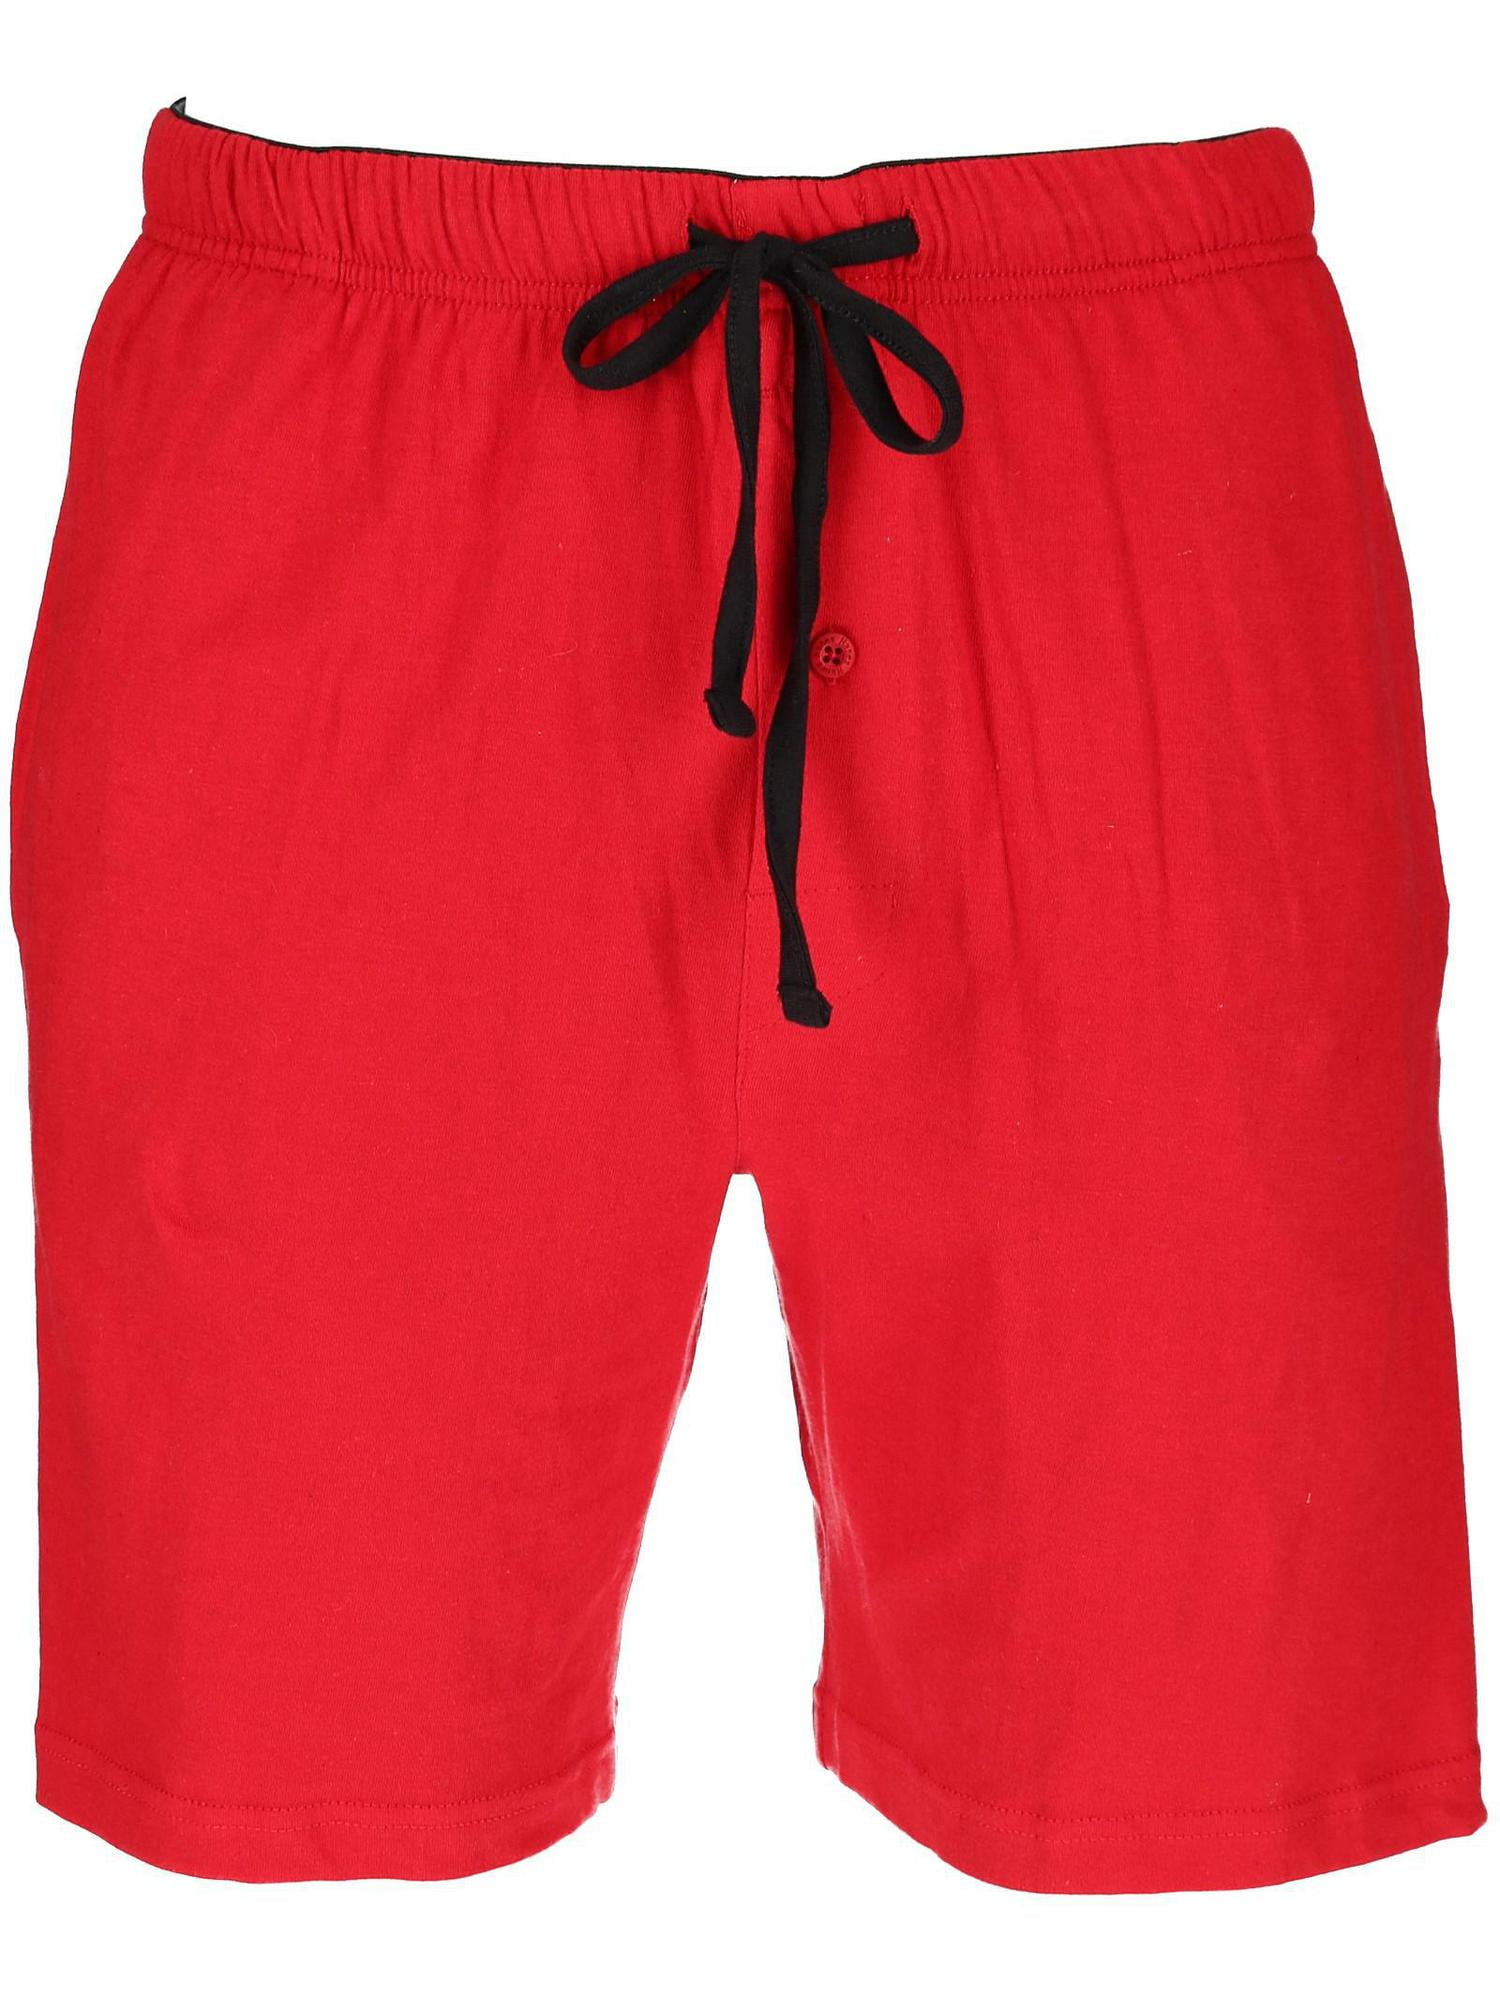 Hanes Jersey Knit Cotton Sleep Shorts (Pack of 3) (Men) - Walmart.com